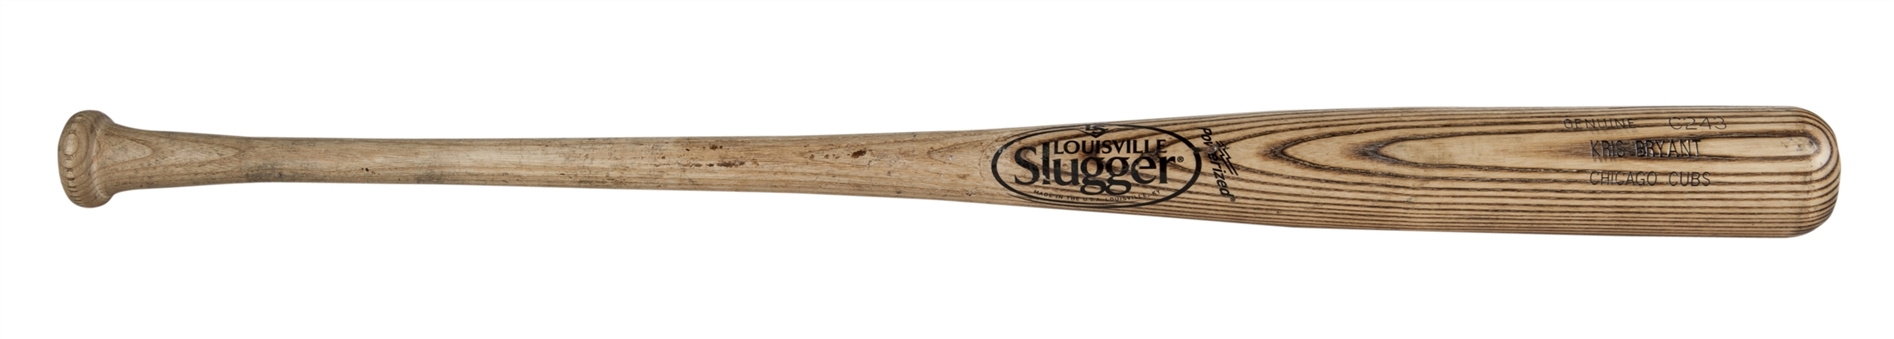 2014 Kris Bryant Game Used Louisville Slugger C243 Model Bat (PSA/DNA)